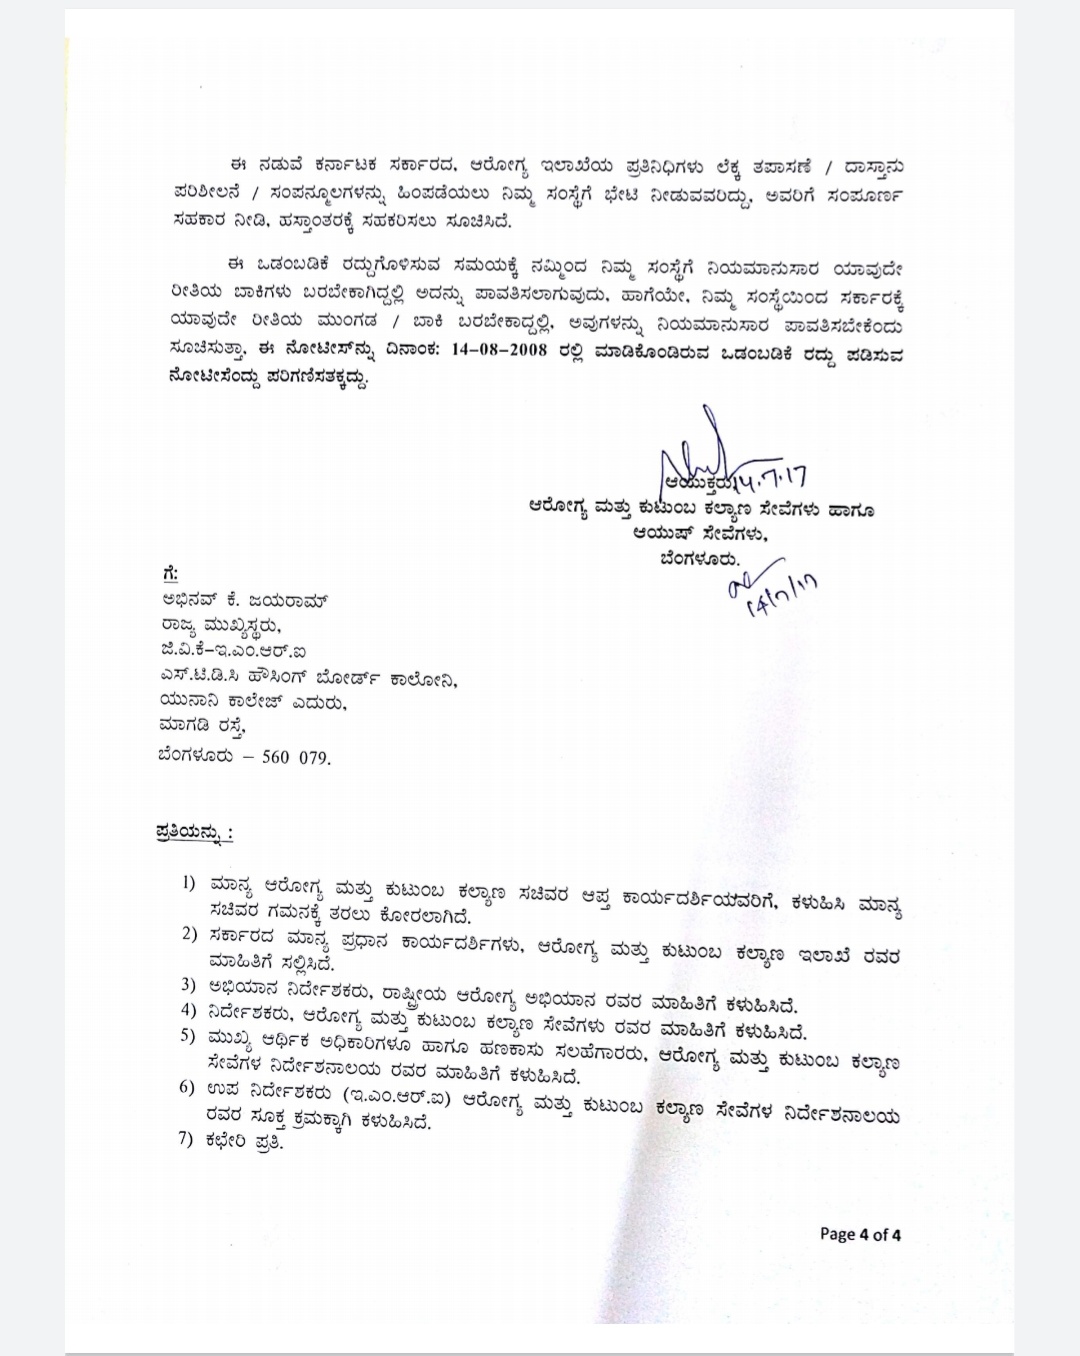 complaint registeres against IAS officer pankaj kumar pande